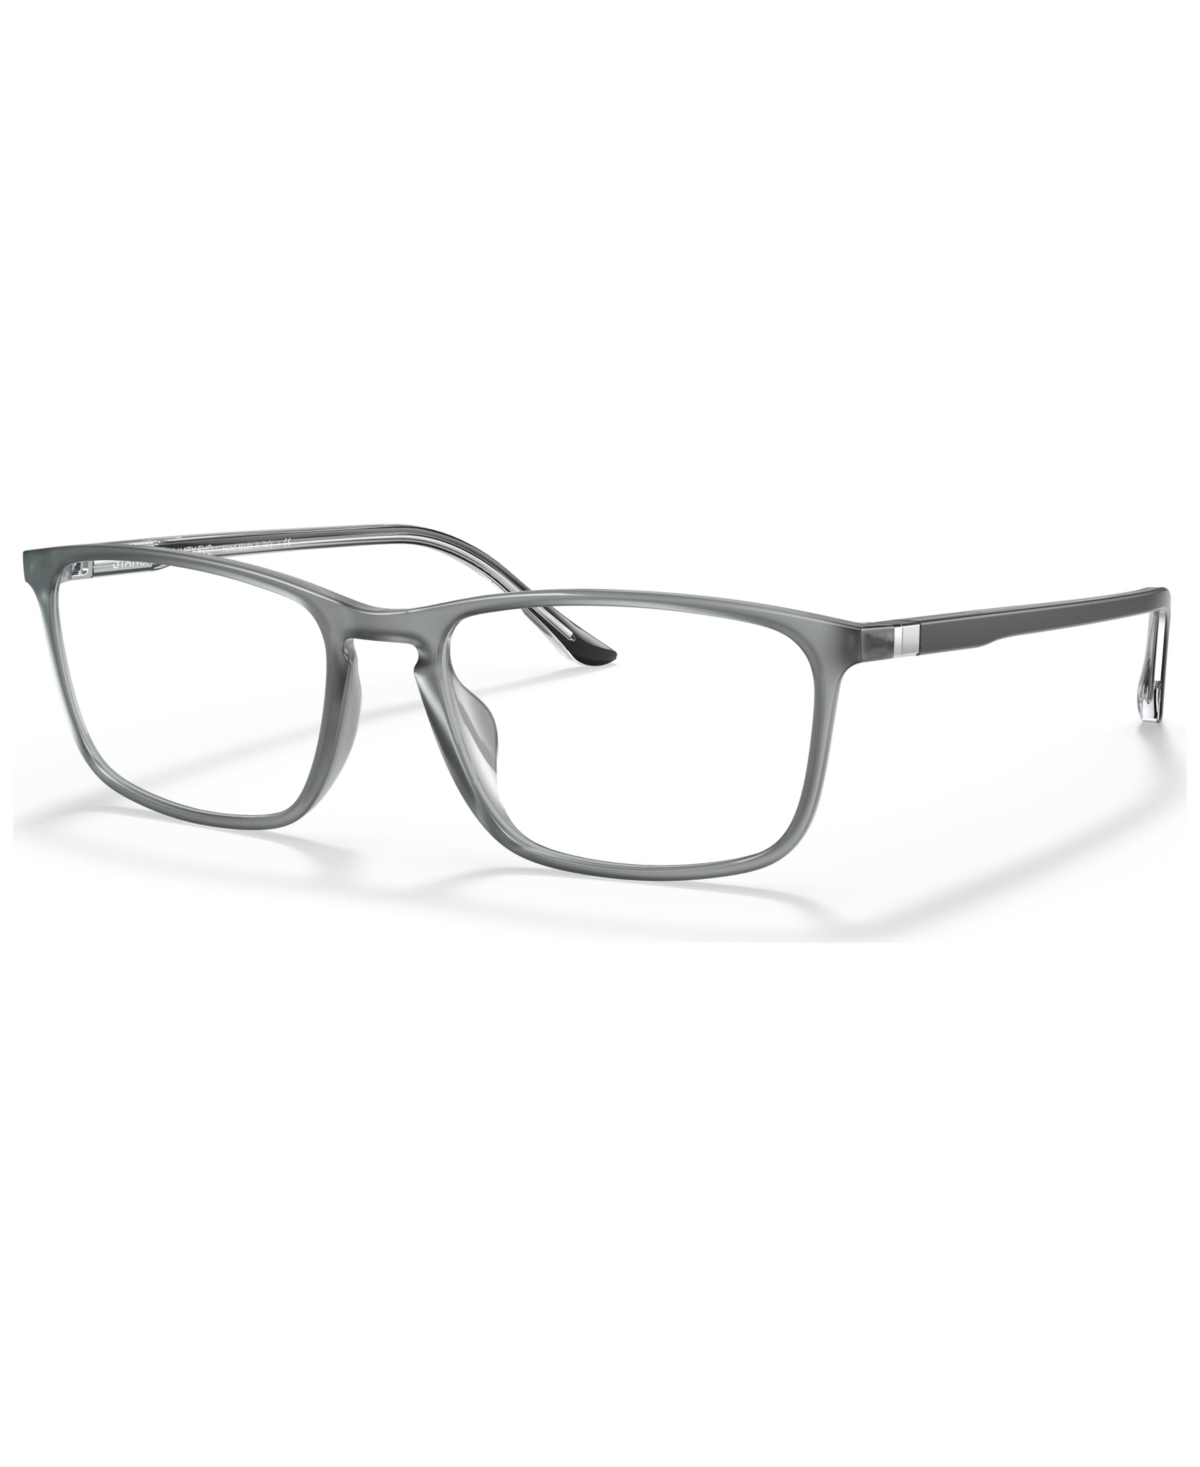 Men's Eyeglasses, SH3073 - Transparent Gray